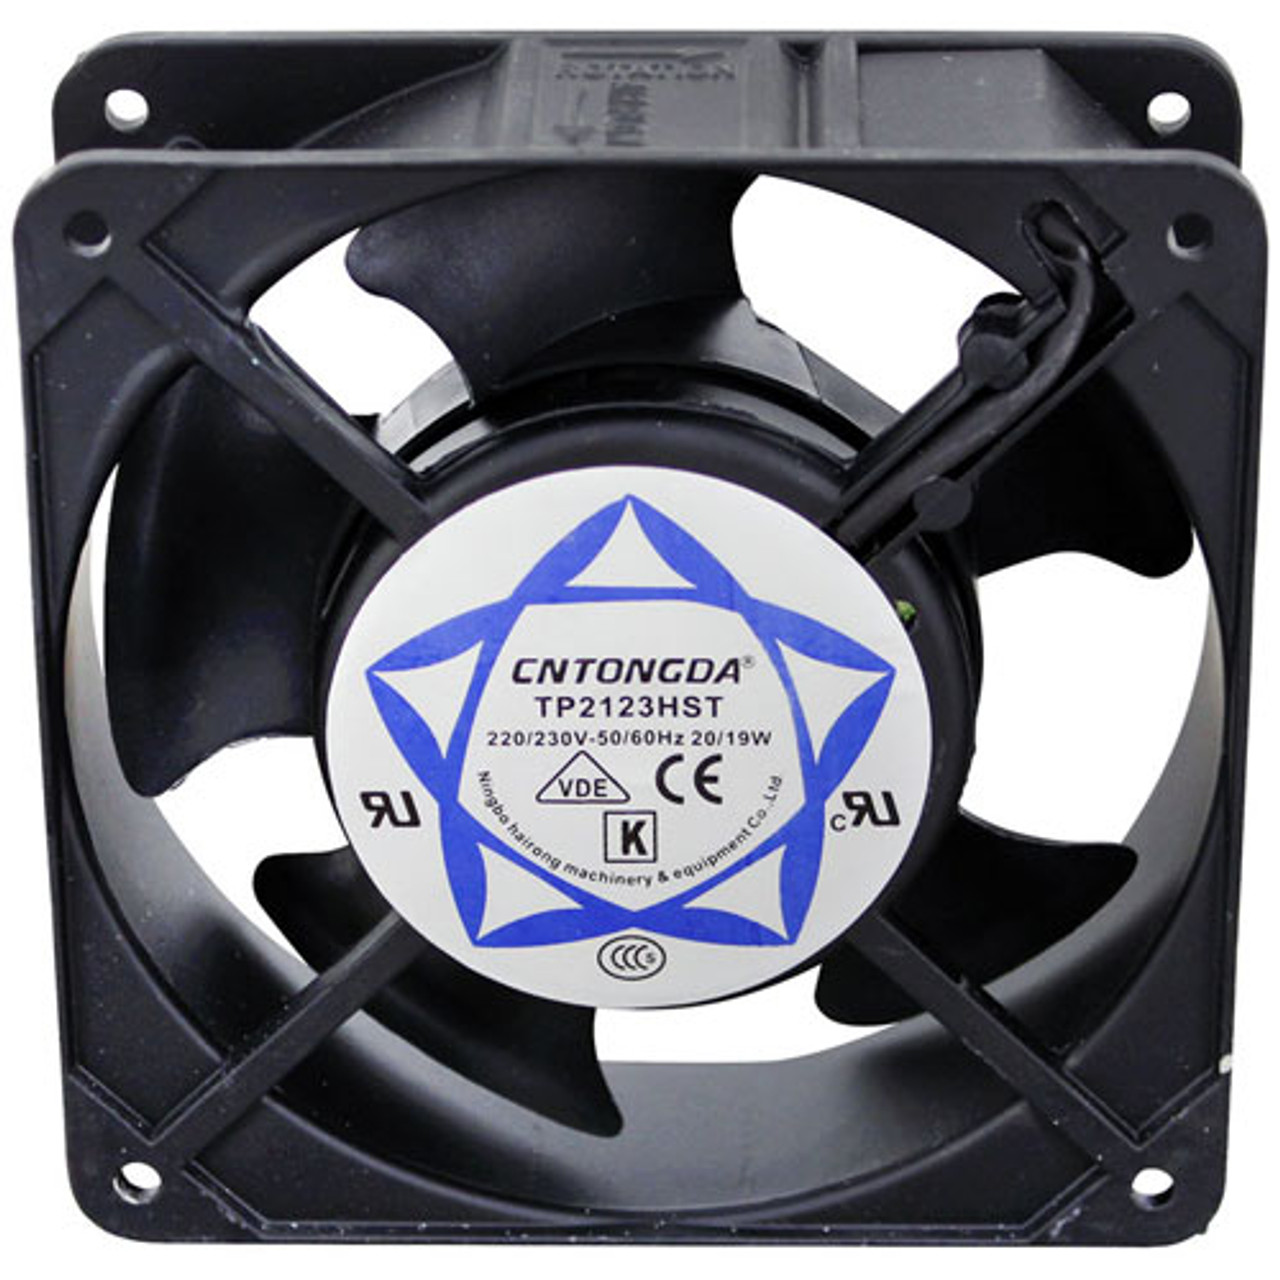 Cooling Fan 220V/240V, 3100 Rpm - Replacement Part For Belleco BELC401211